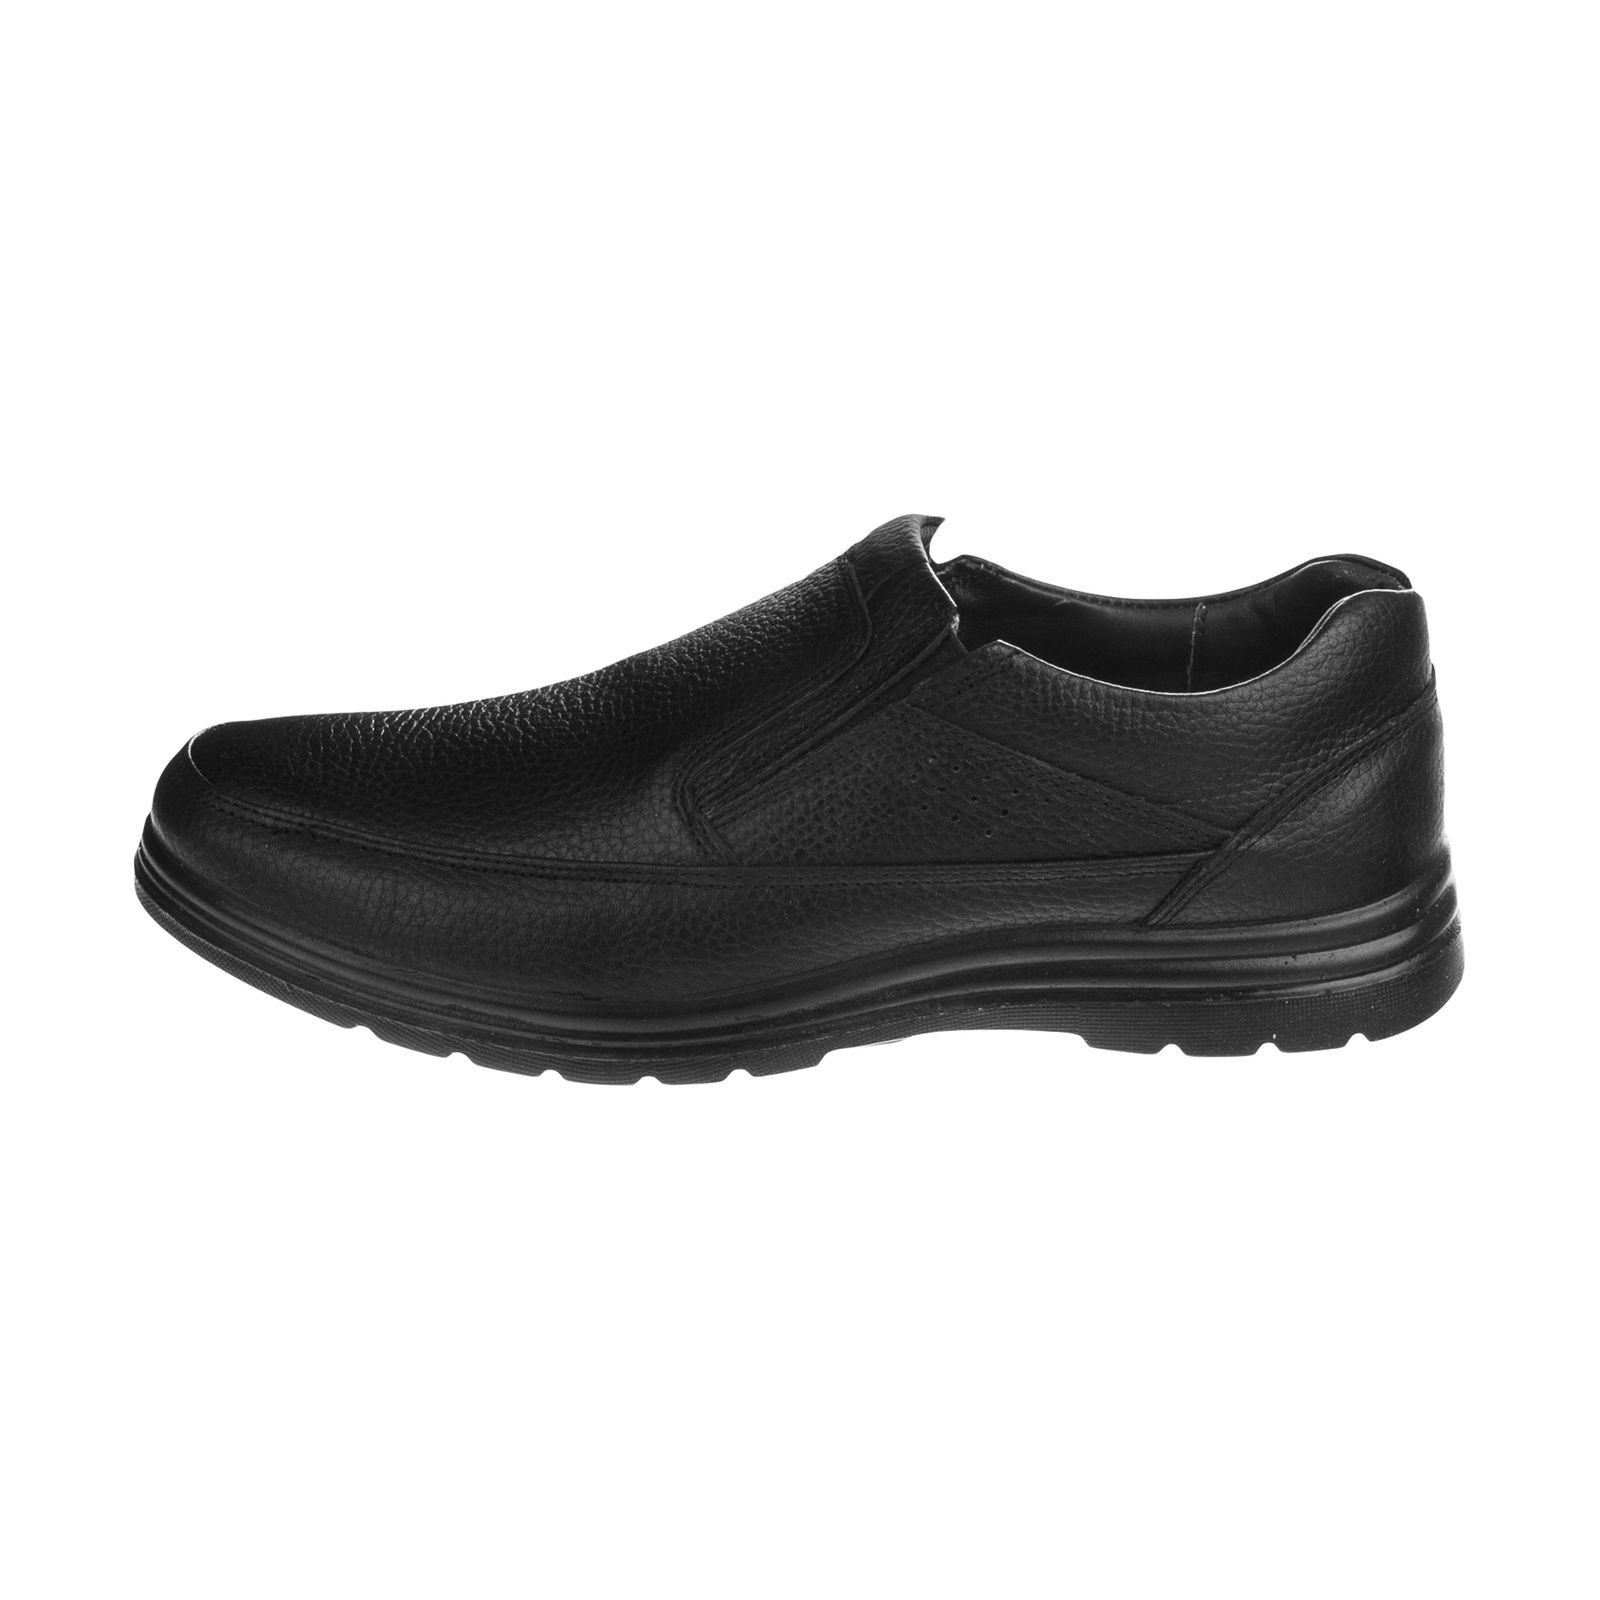 کفش روزمره مردانه شیفر مدل 7237a503101 - مشکی - 1